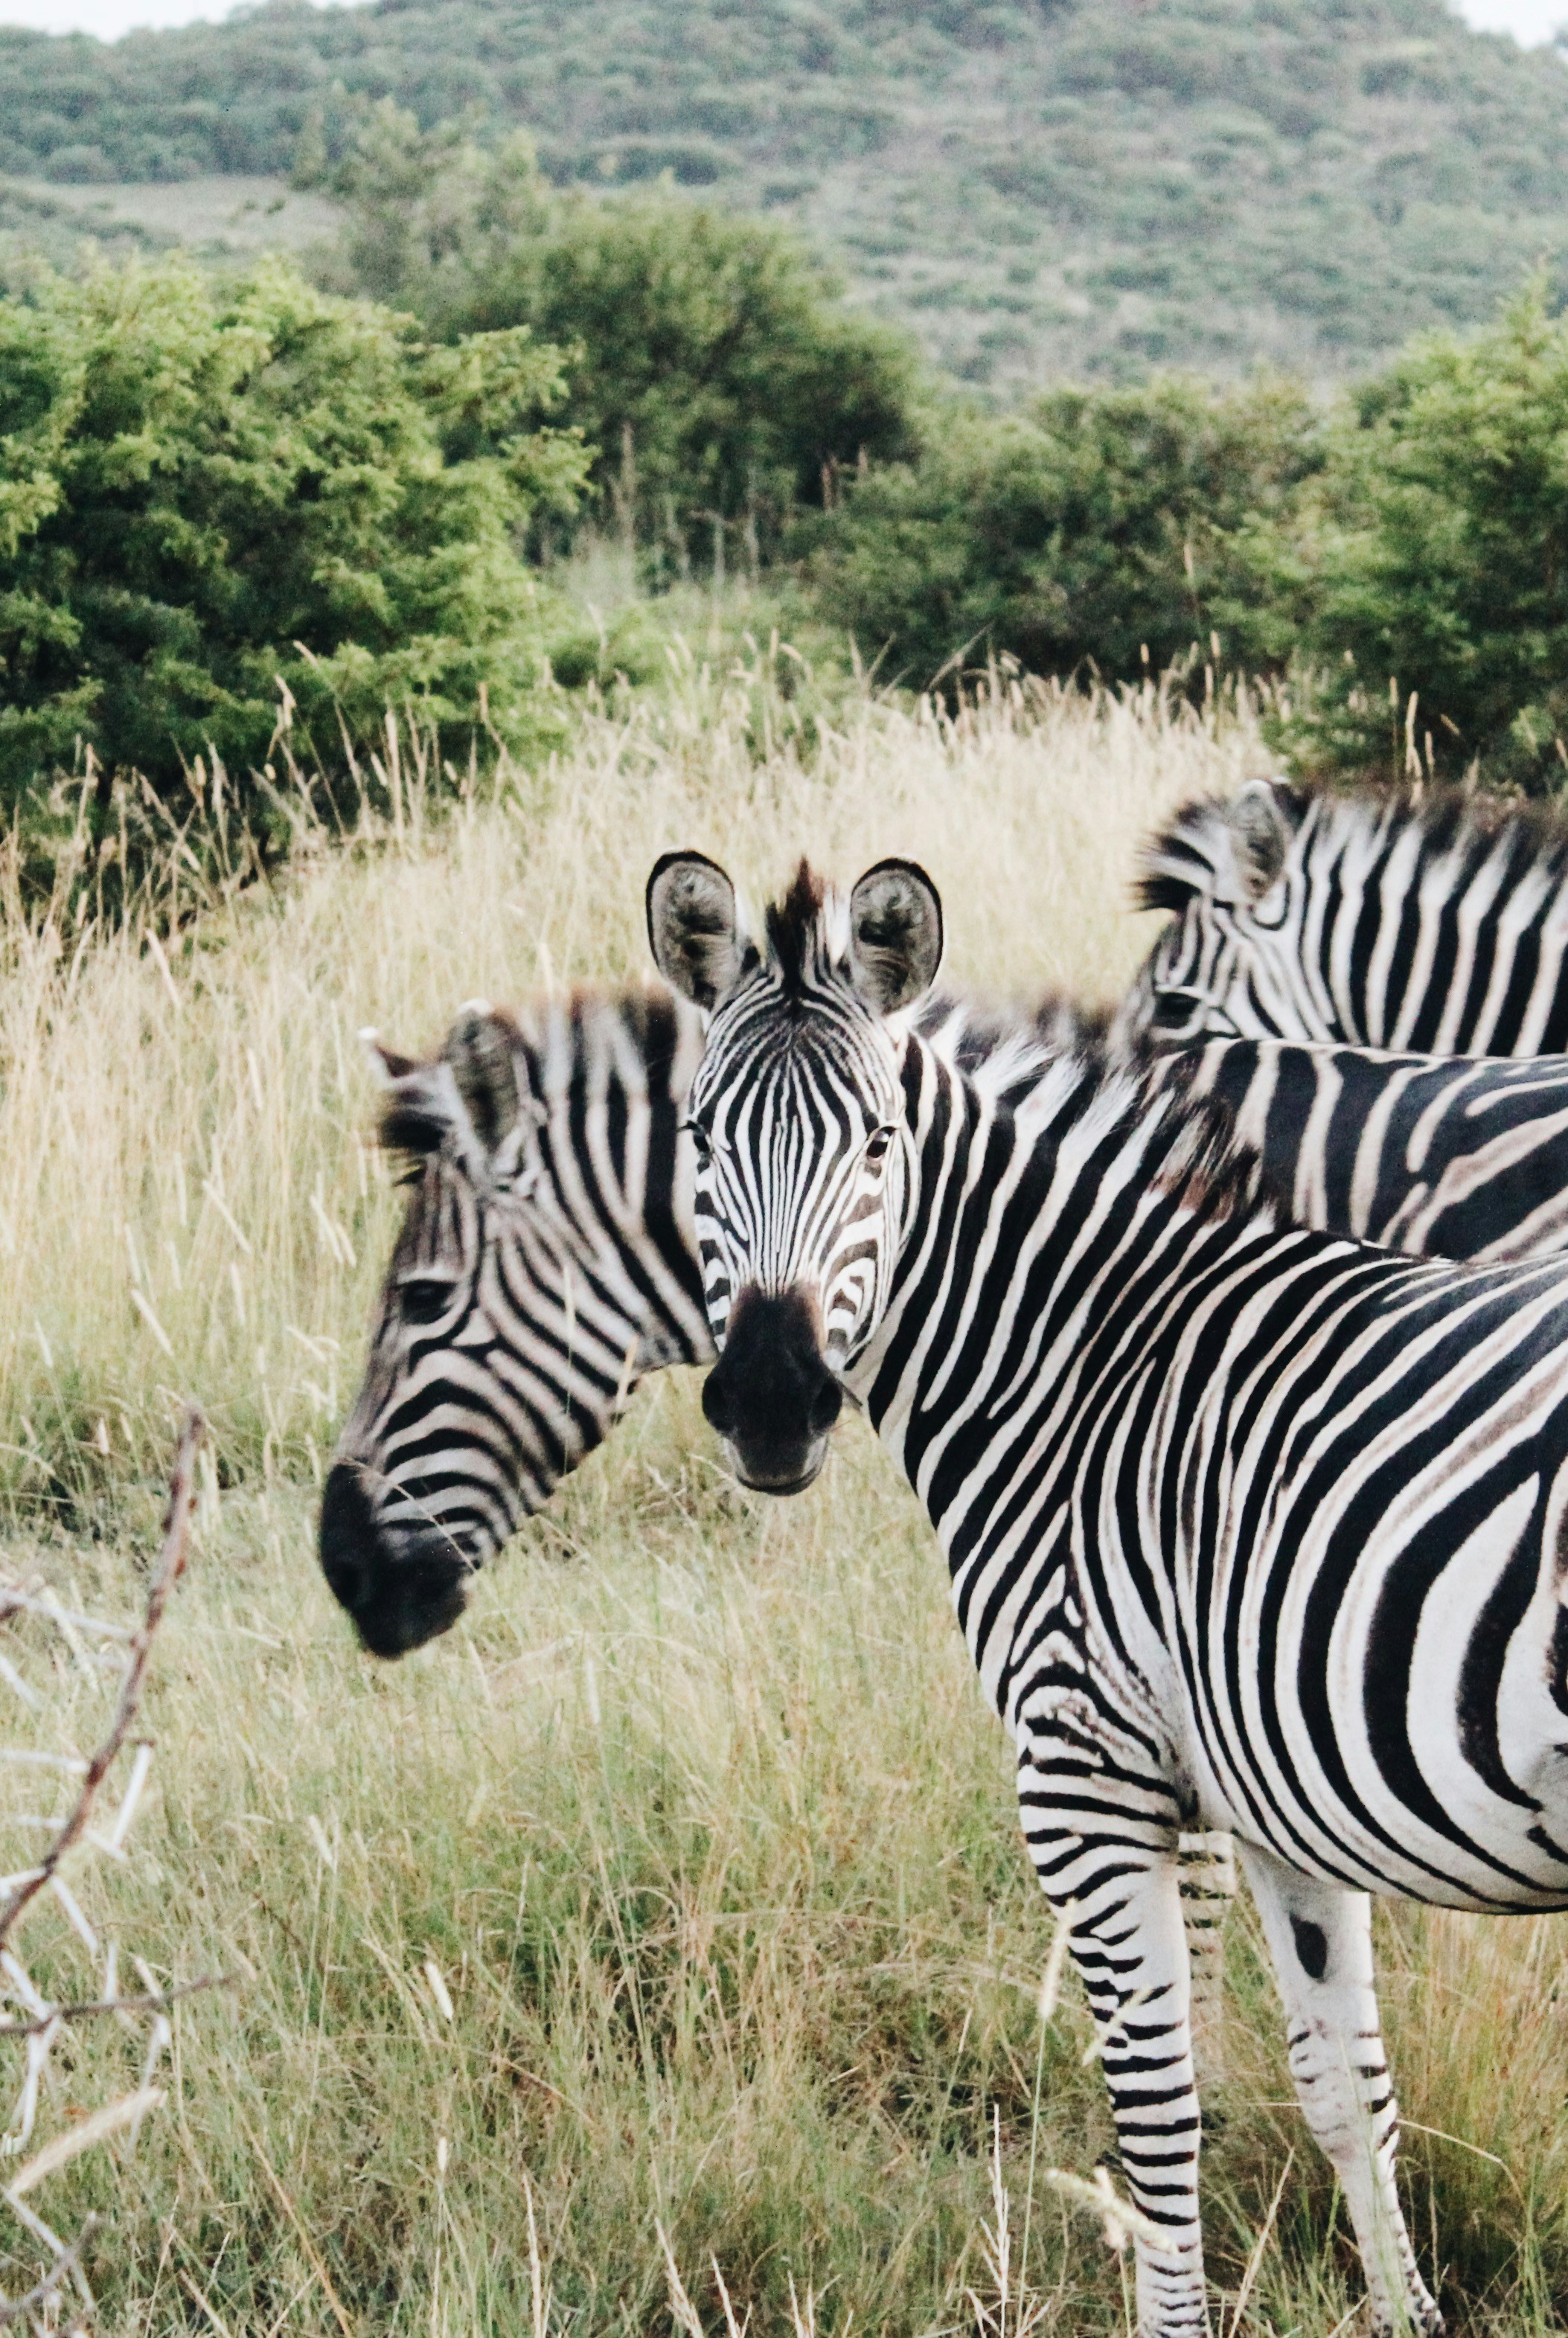 A zebra strikes its most symmetrical pose for me.